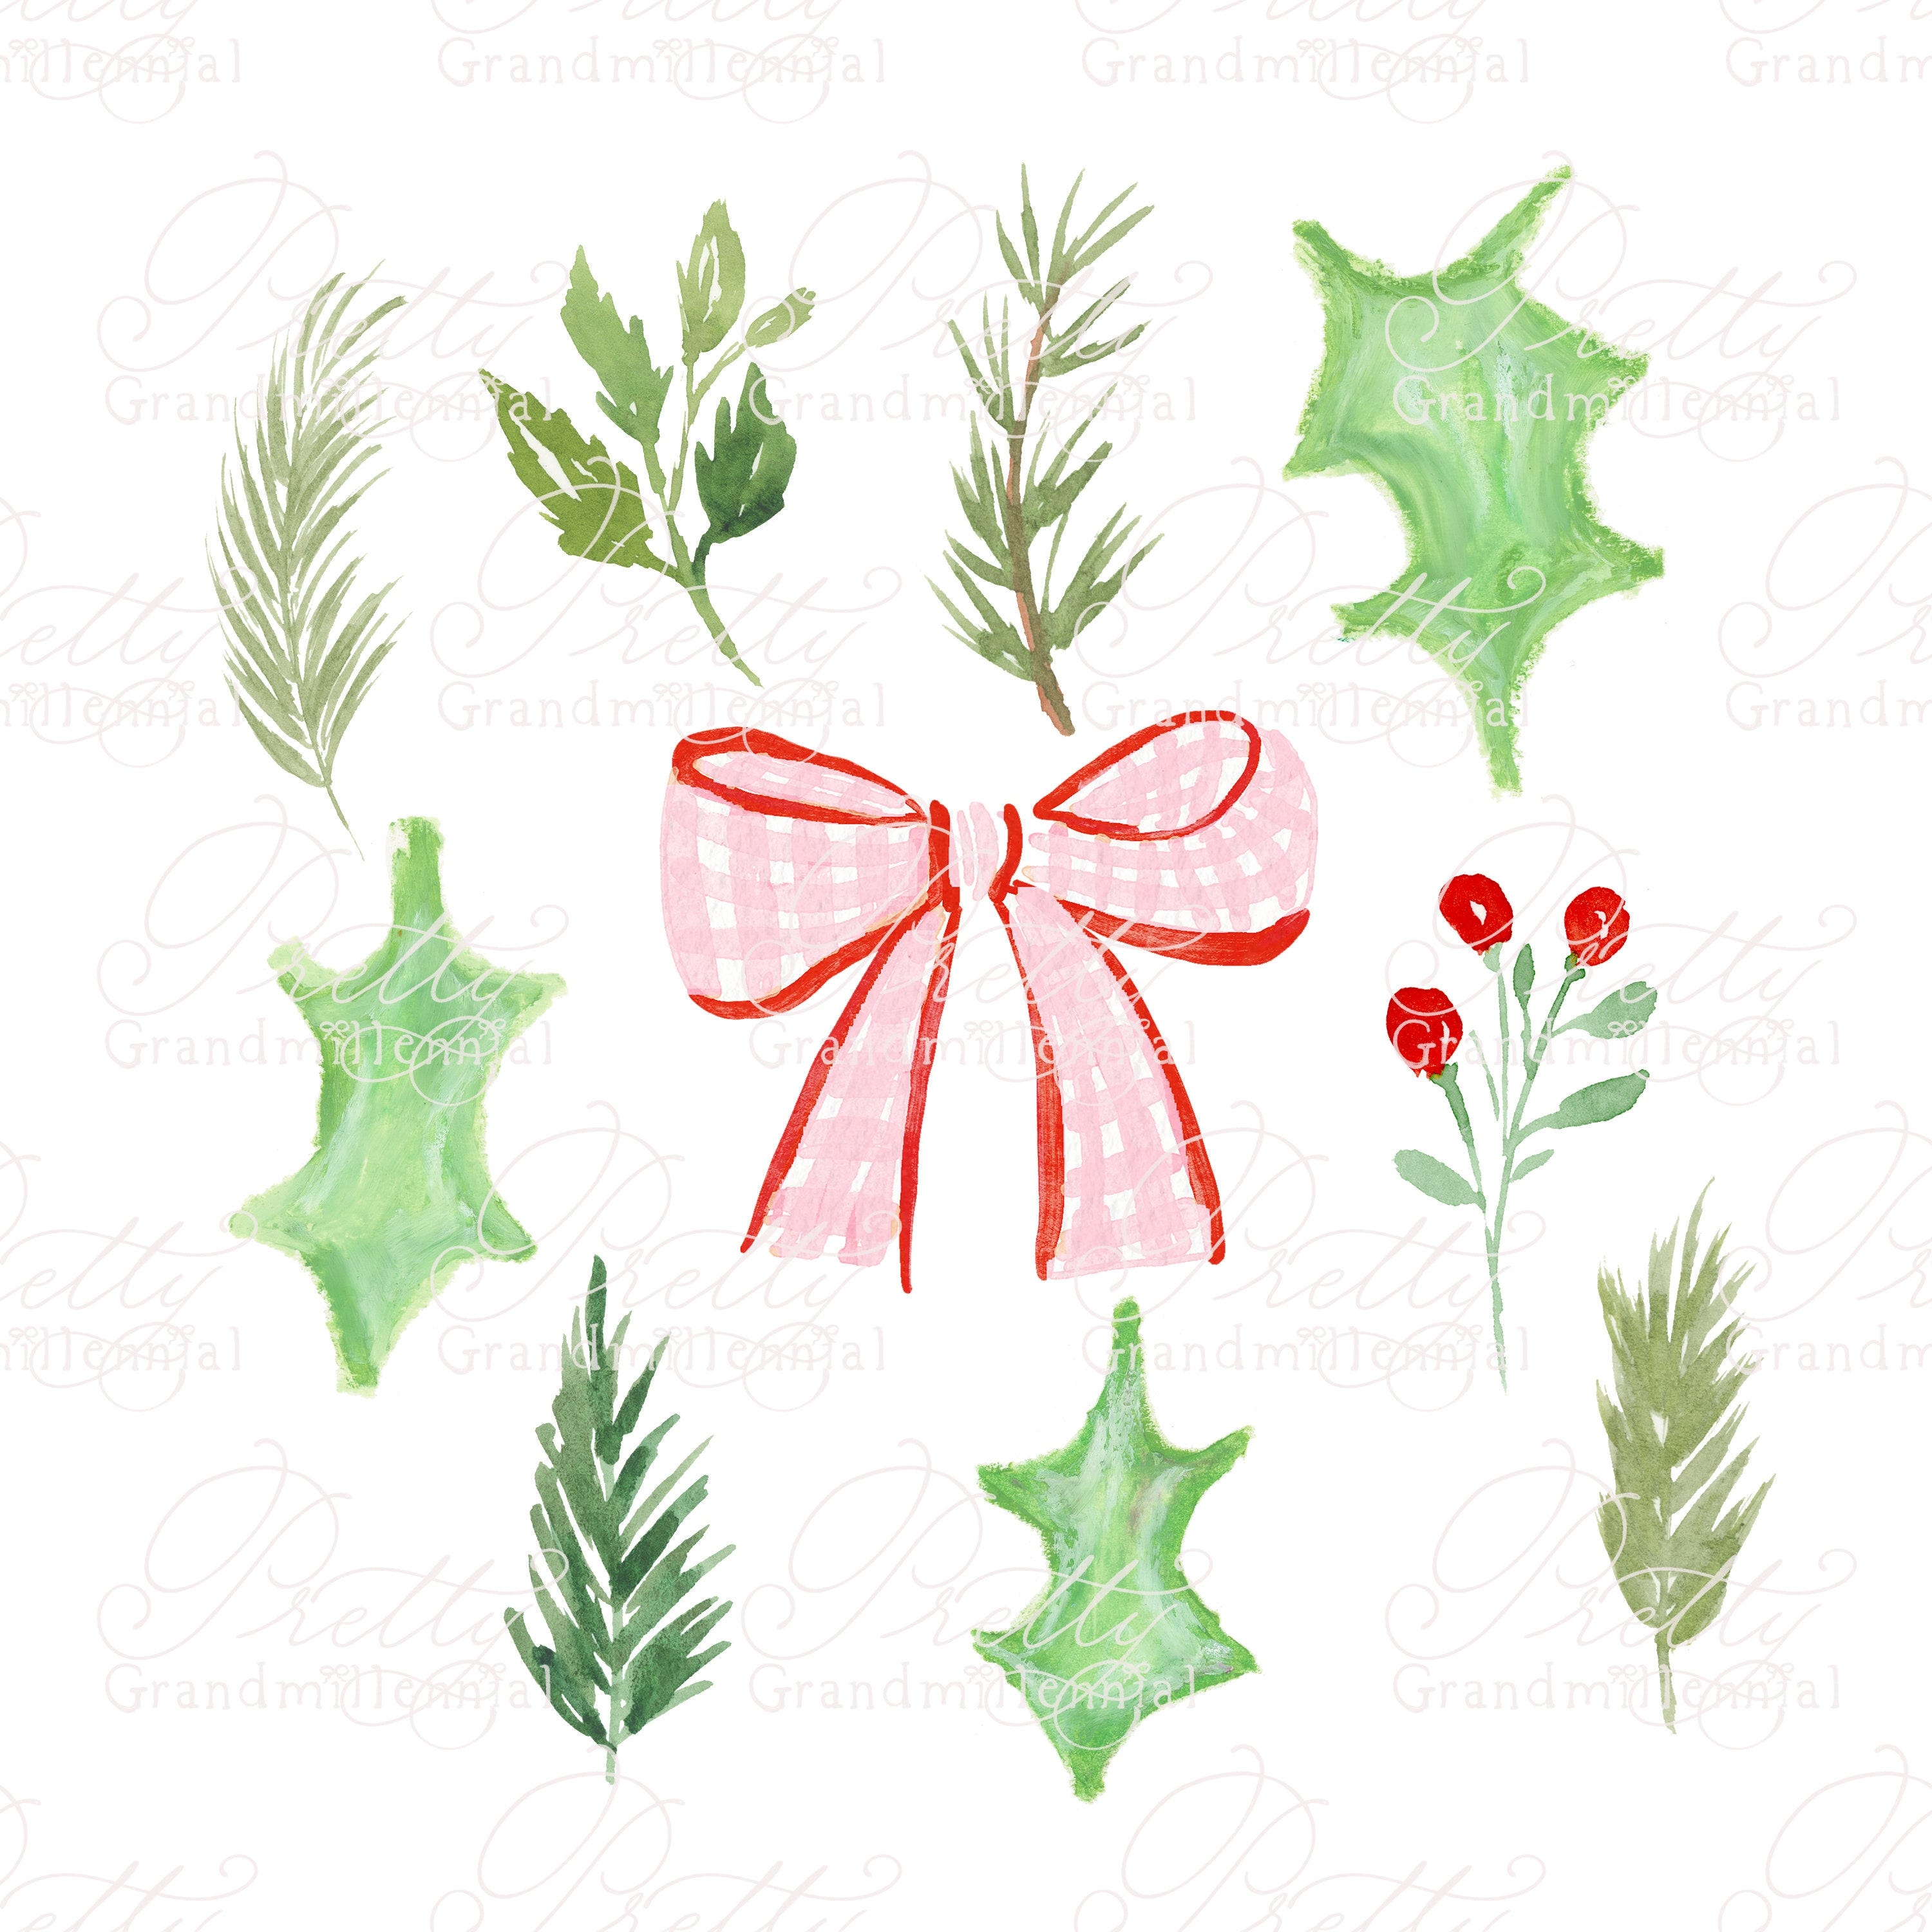 Watercolor Christmas clipart, gingham bow clipart, Christmas holly clipart, watercolor holly clipart, berries, leaves, grandmillennial